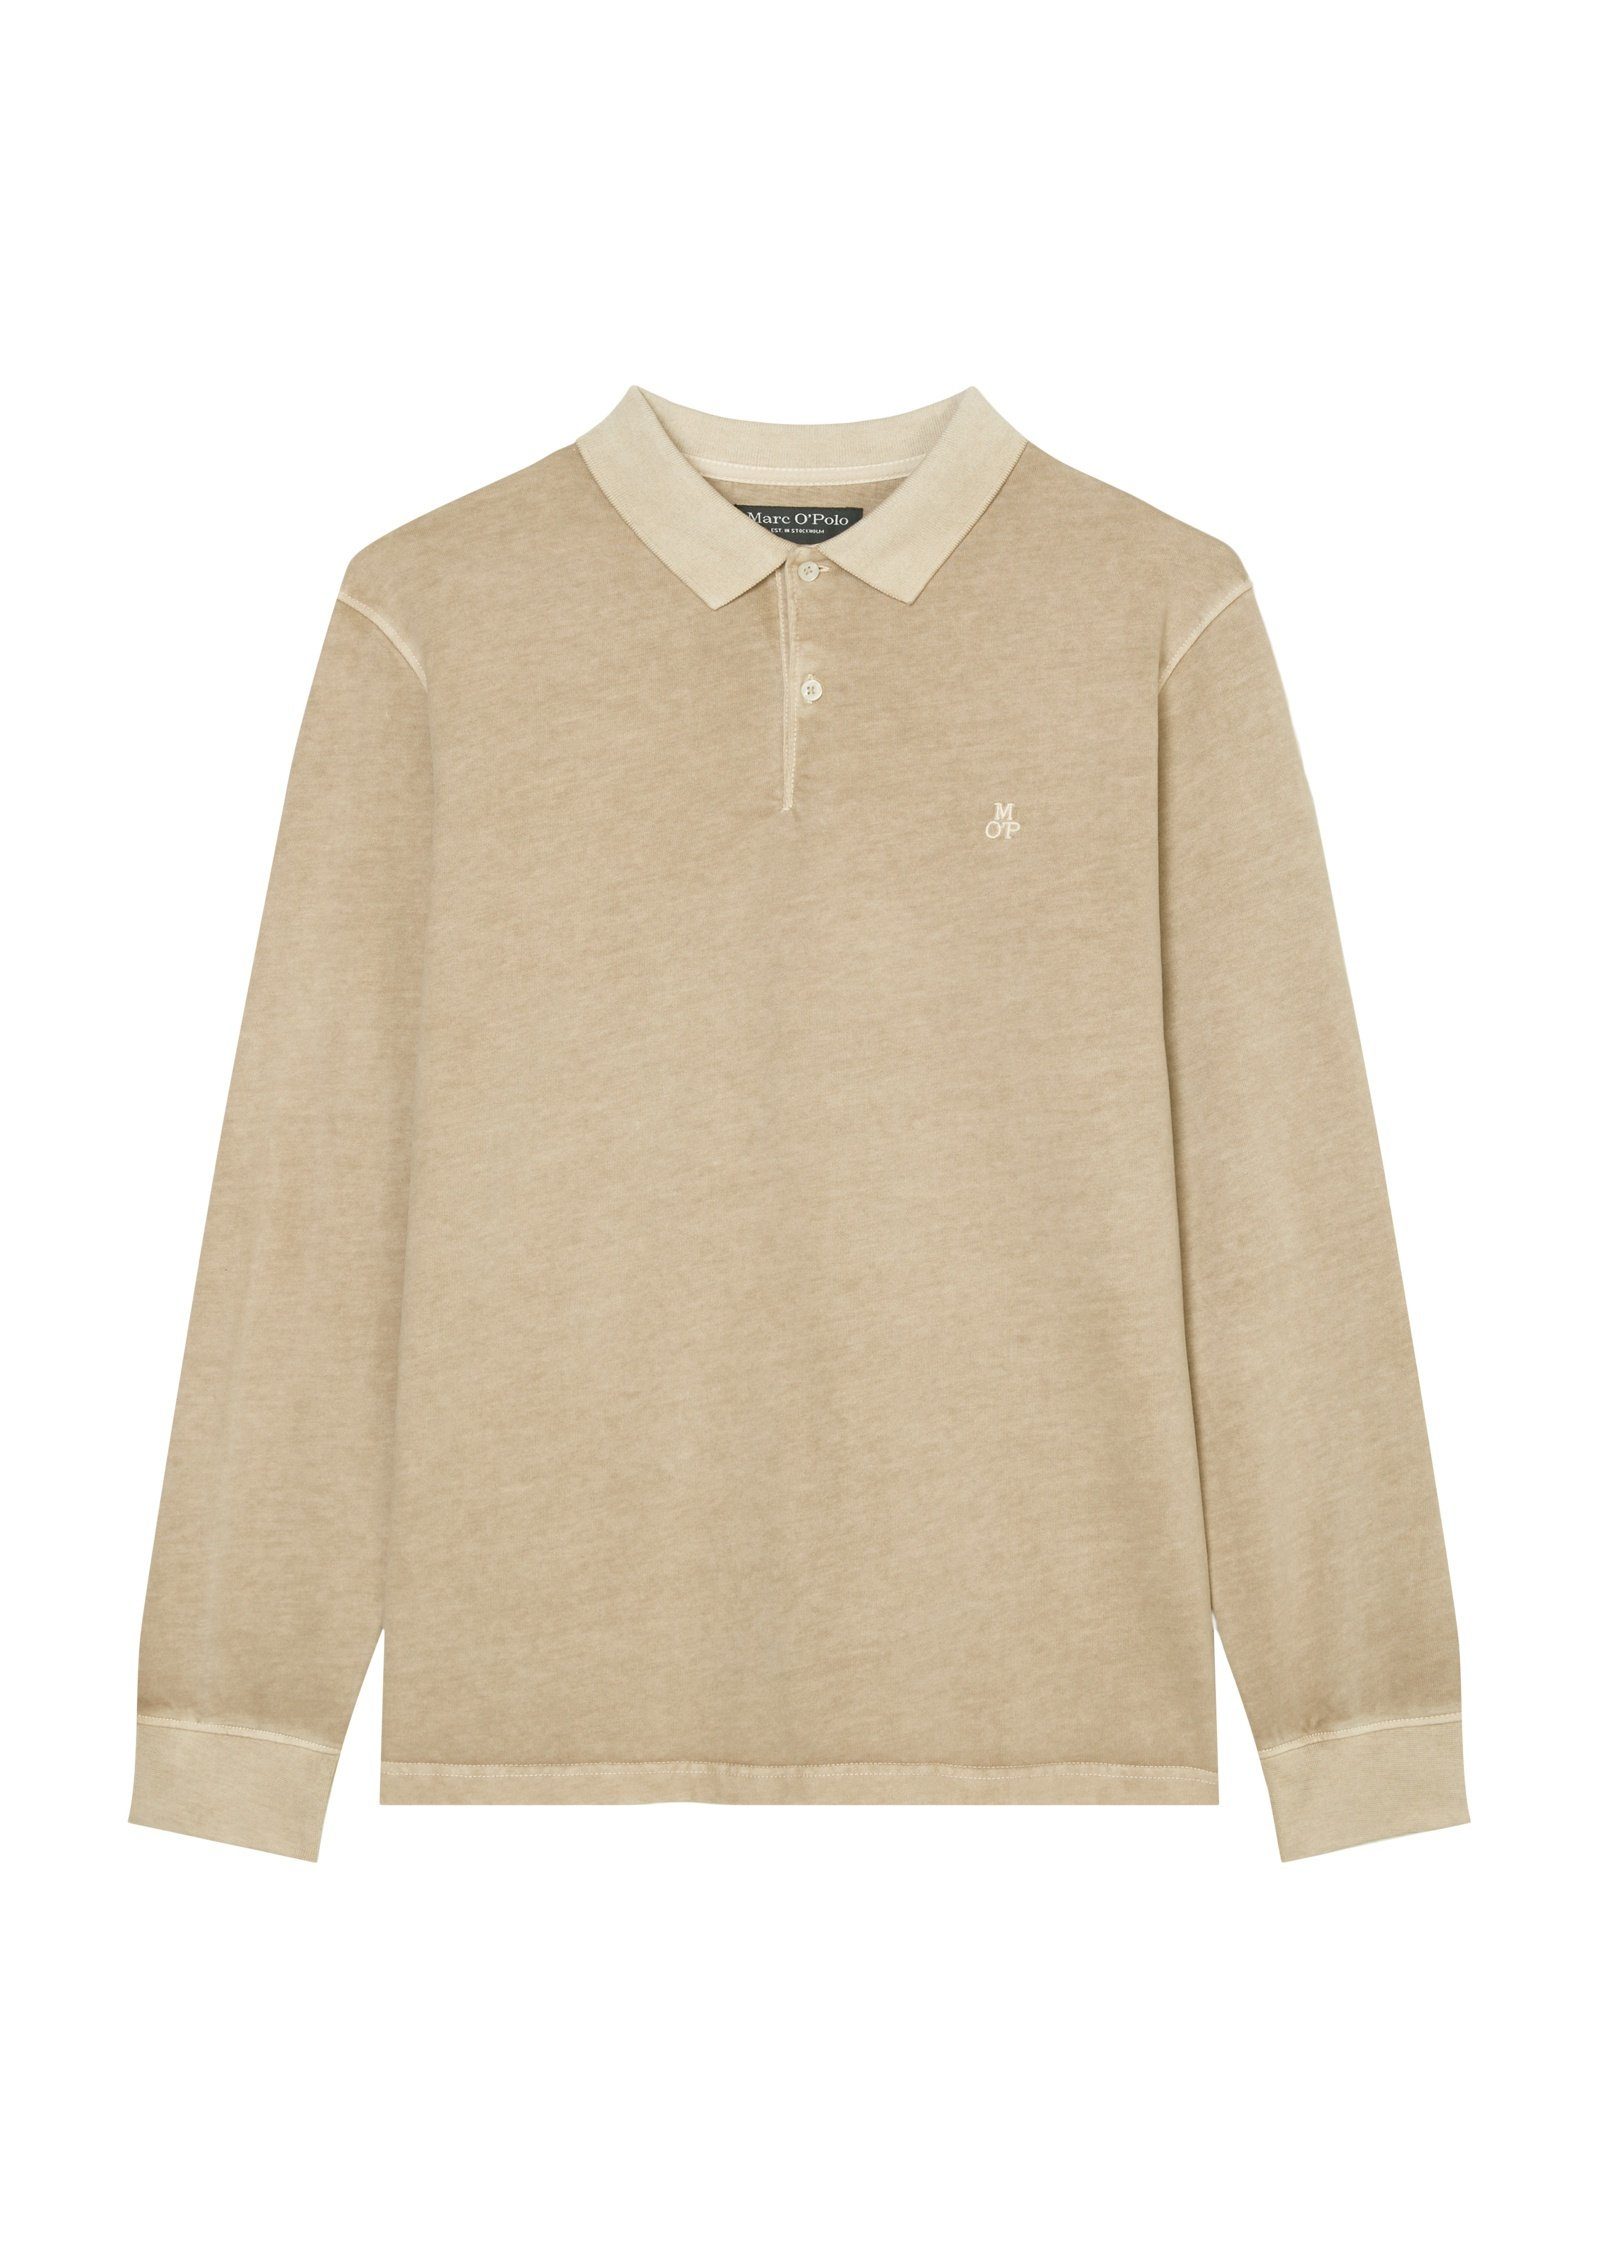 braun O'Polo in Langarm-Poloshirt Soft-Touch-Jersey-Qualität Marc